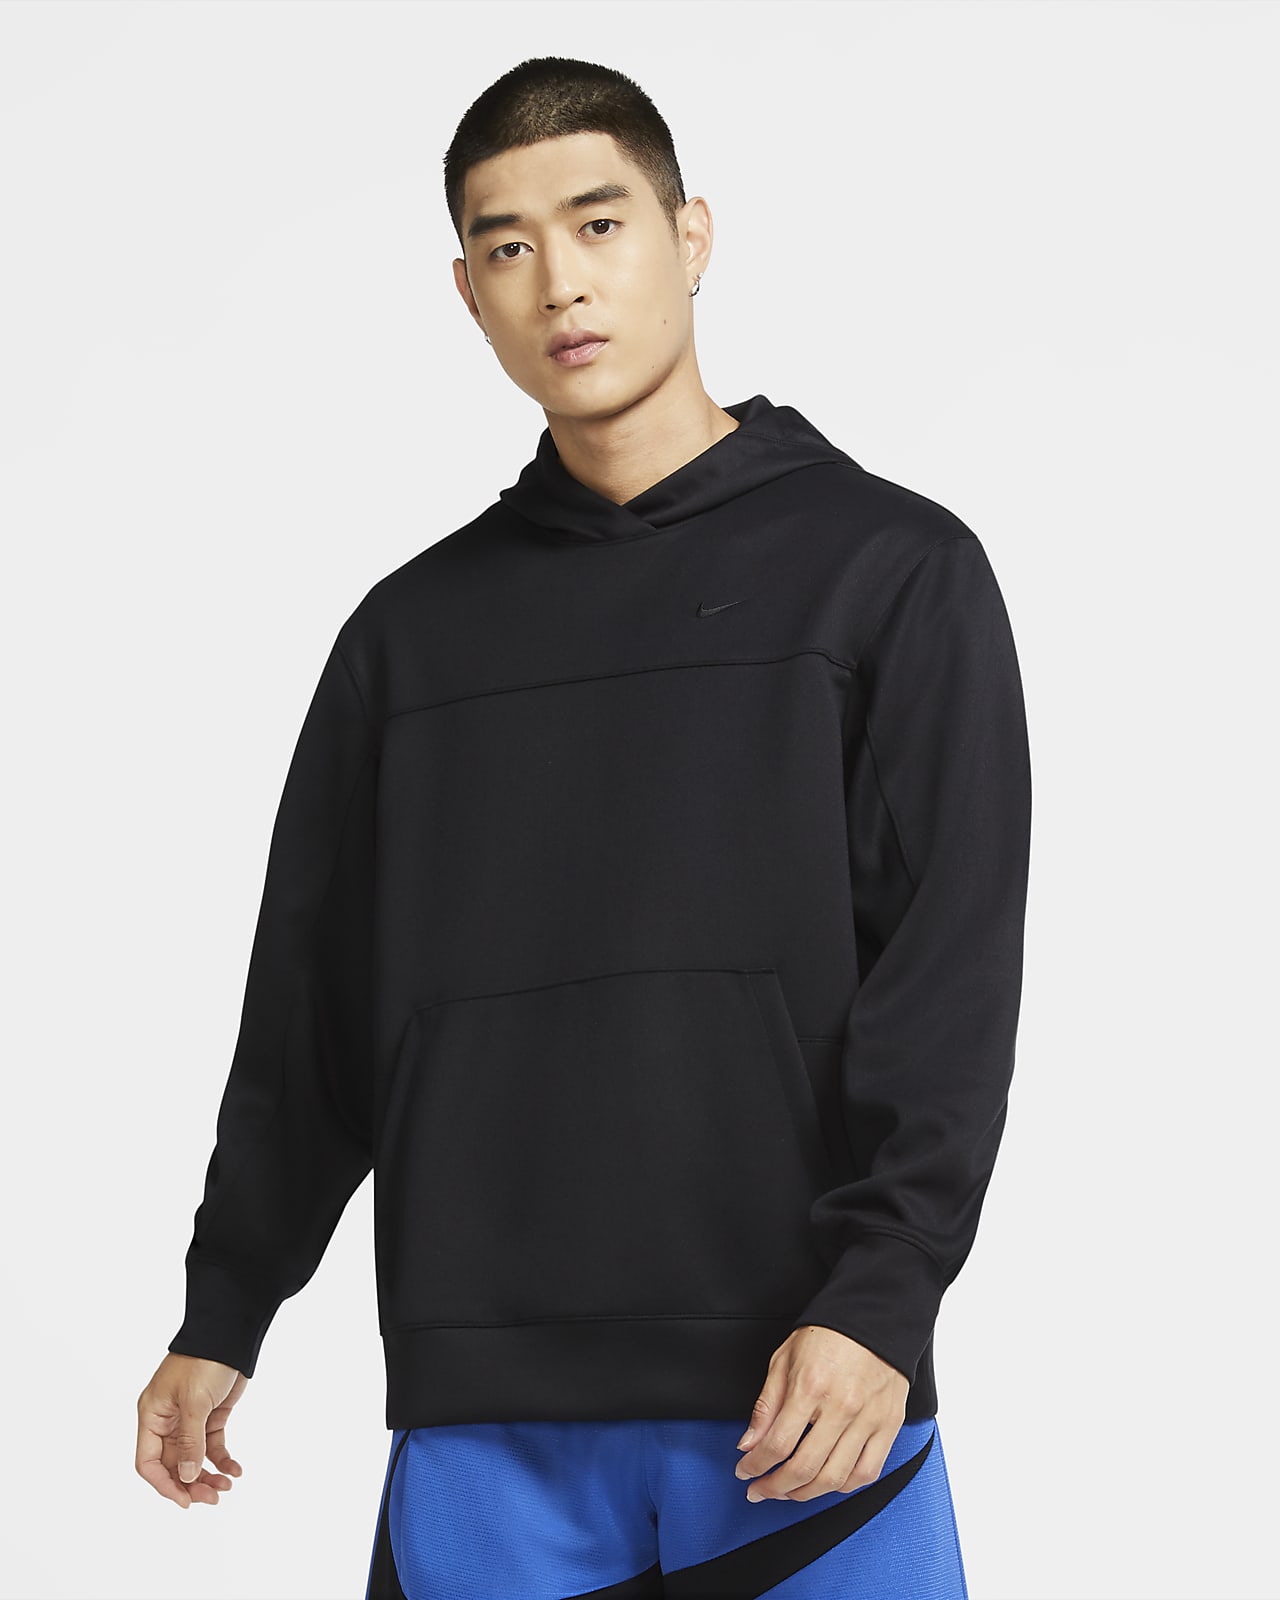 men's nike spotlight basketball pullover hoodie